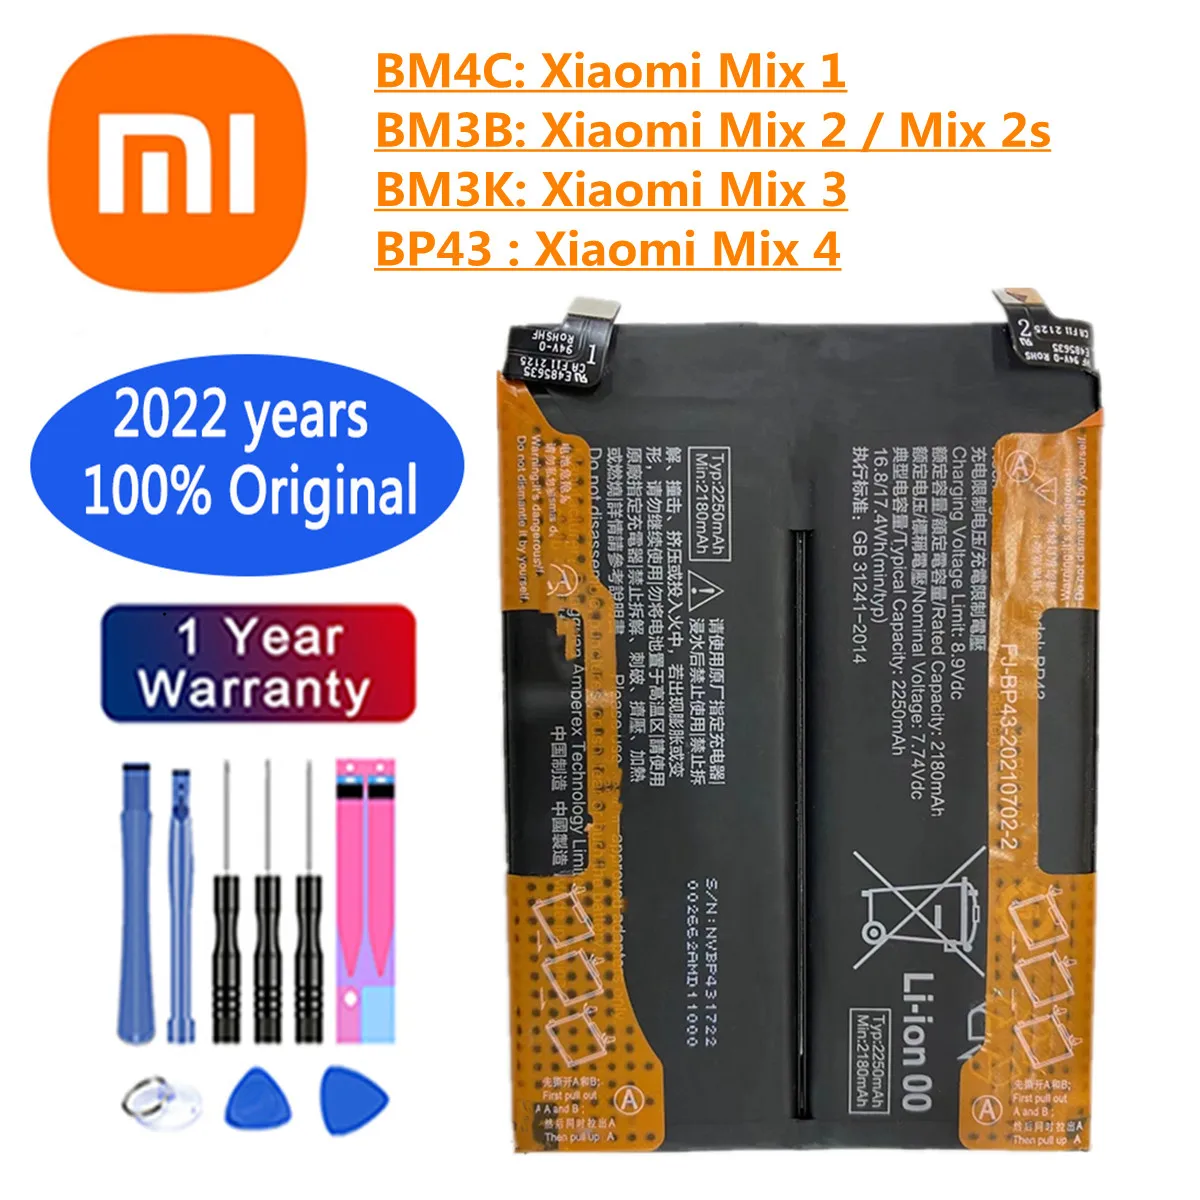 

Orginal Xiao Mi BM3B BM3K BM4C BP43 Battery For Xiaomi Mi Mix 2 2S 3 1 4 Mix2 Mix2S Mix3 Mix4 Rechargable Smart Phone Batteries